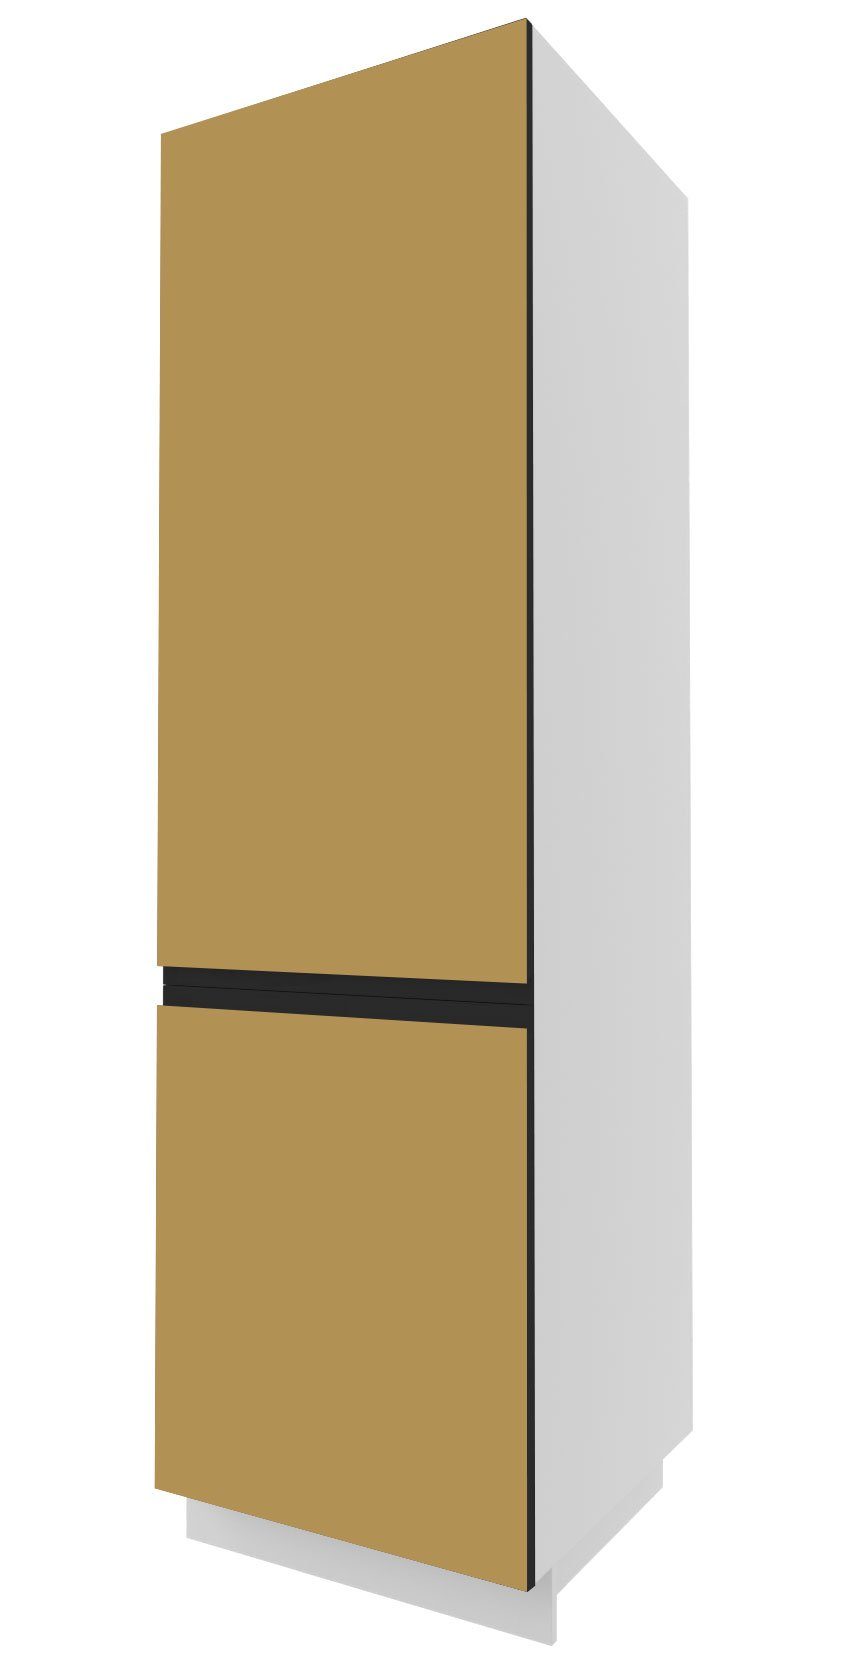 Kühlumbauschrank Front-, rubinrot grifflos 2-türig Ausführung Velden super 60cm & wählbar Korpusfarbe Feldmann-Wohnen matt